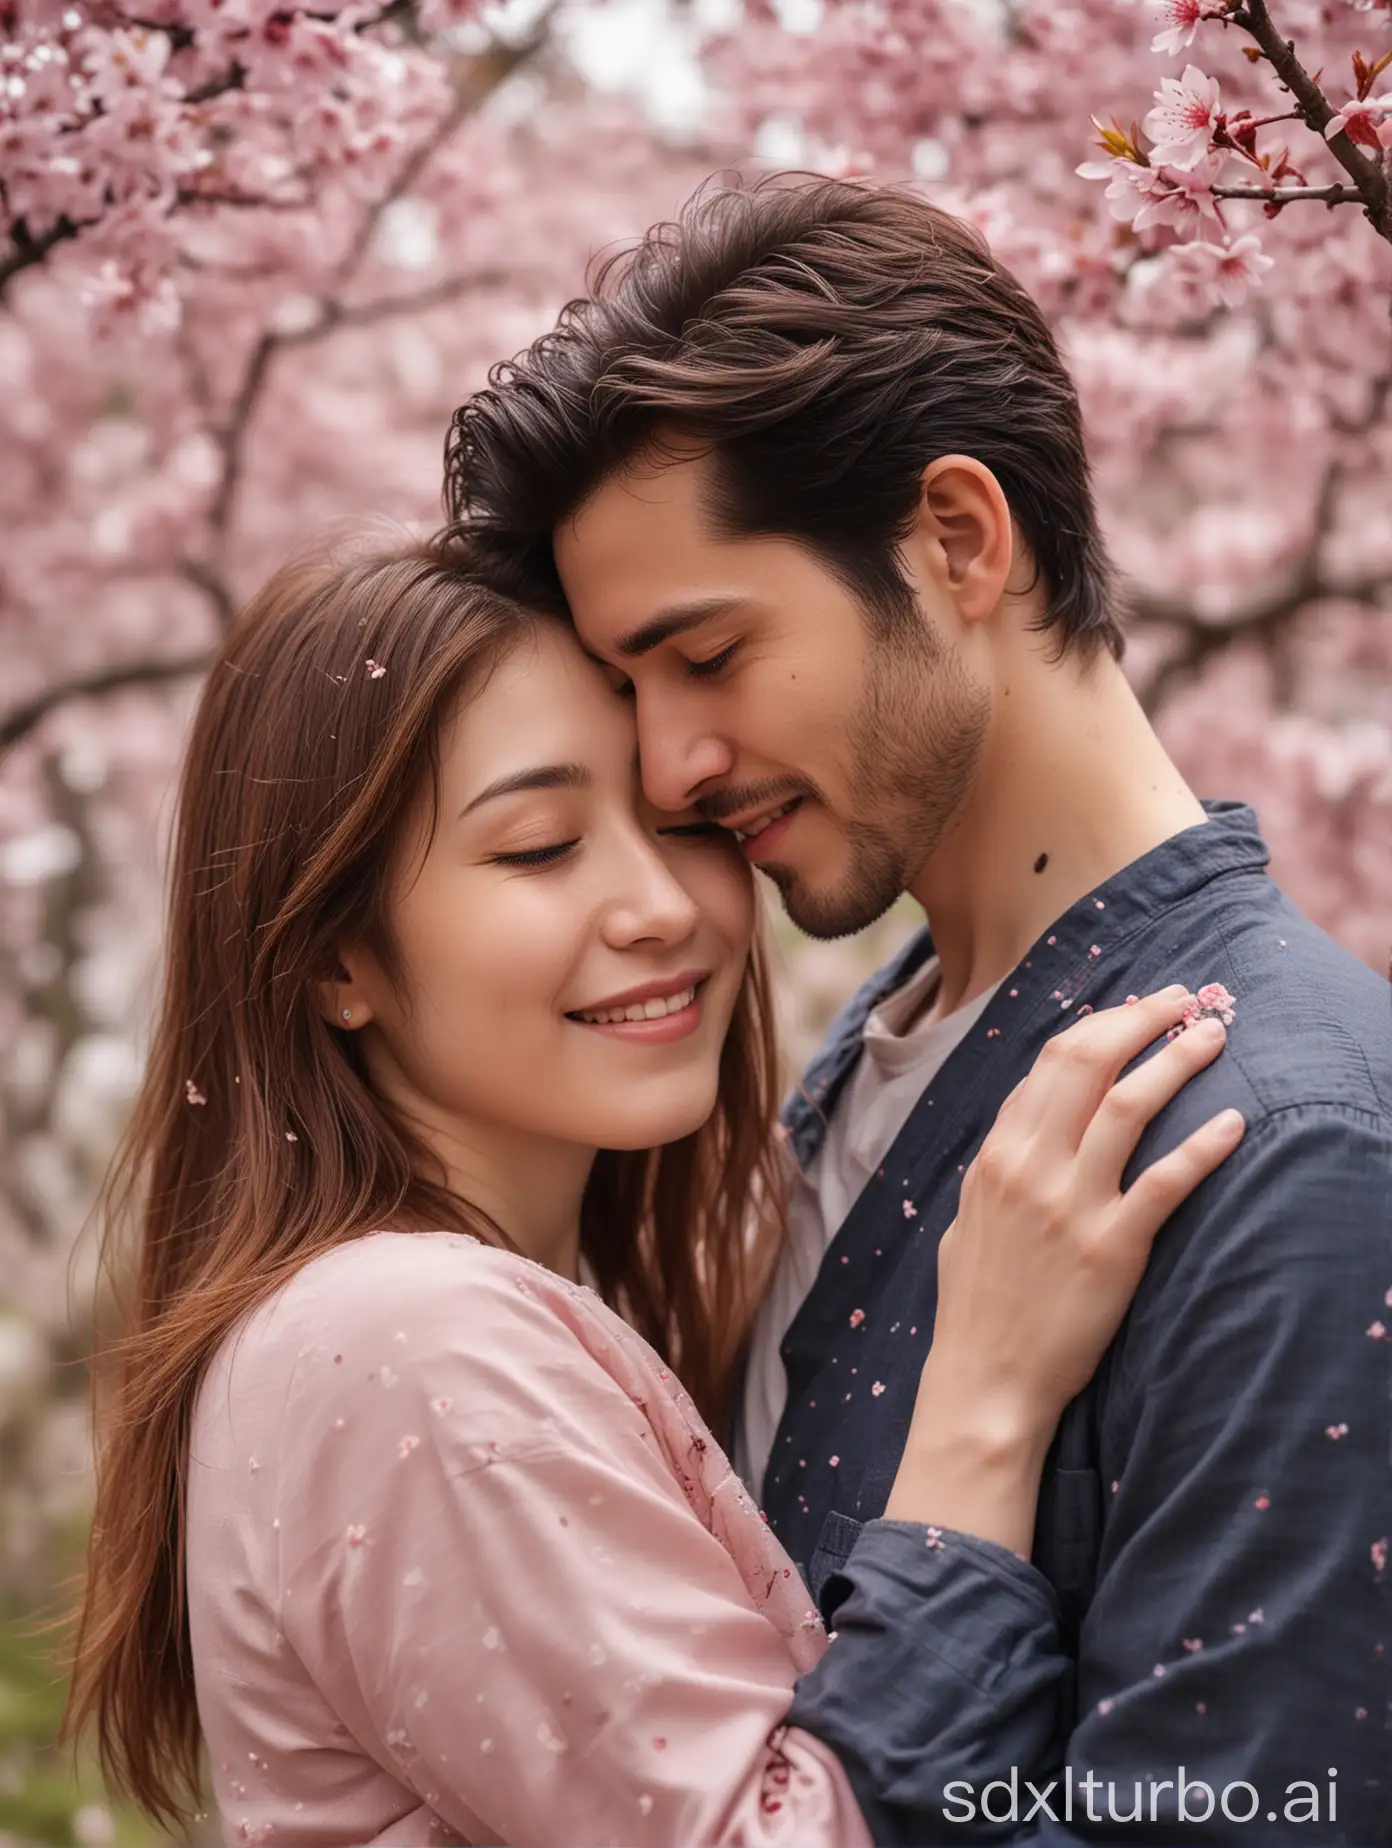 Romantic-Couple-Embracing-Amidst-Sakura-Blossoms